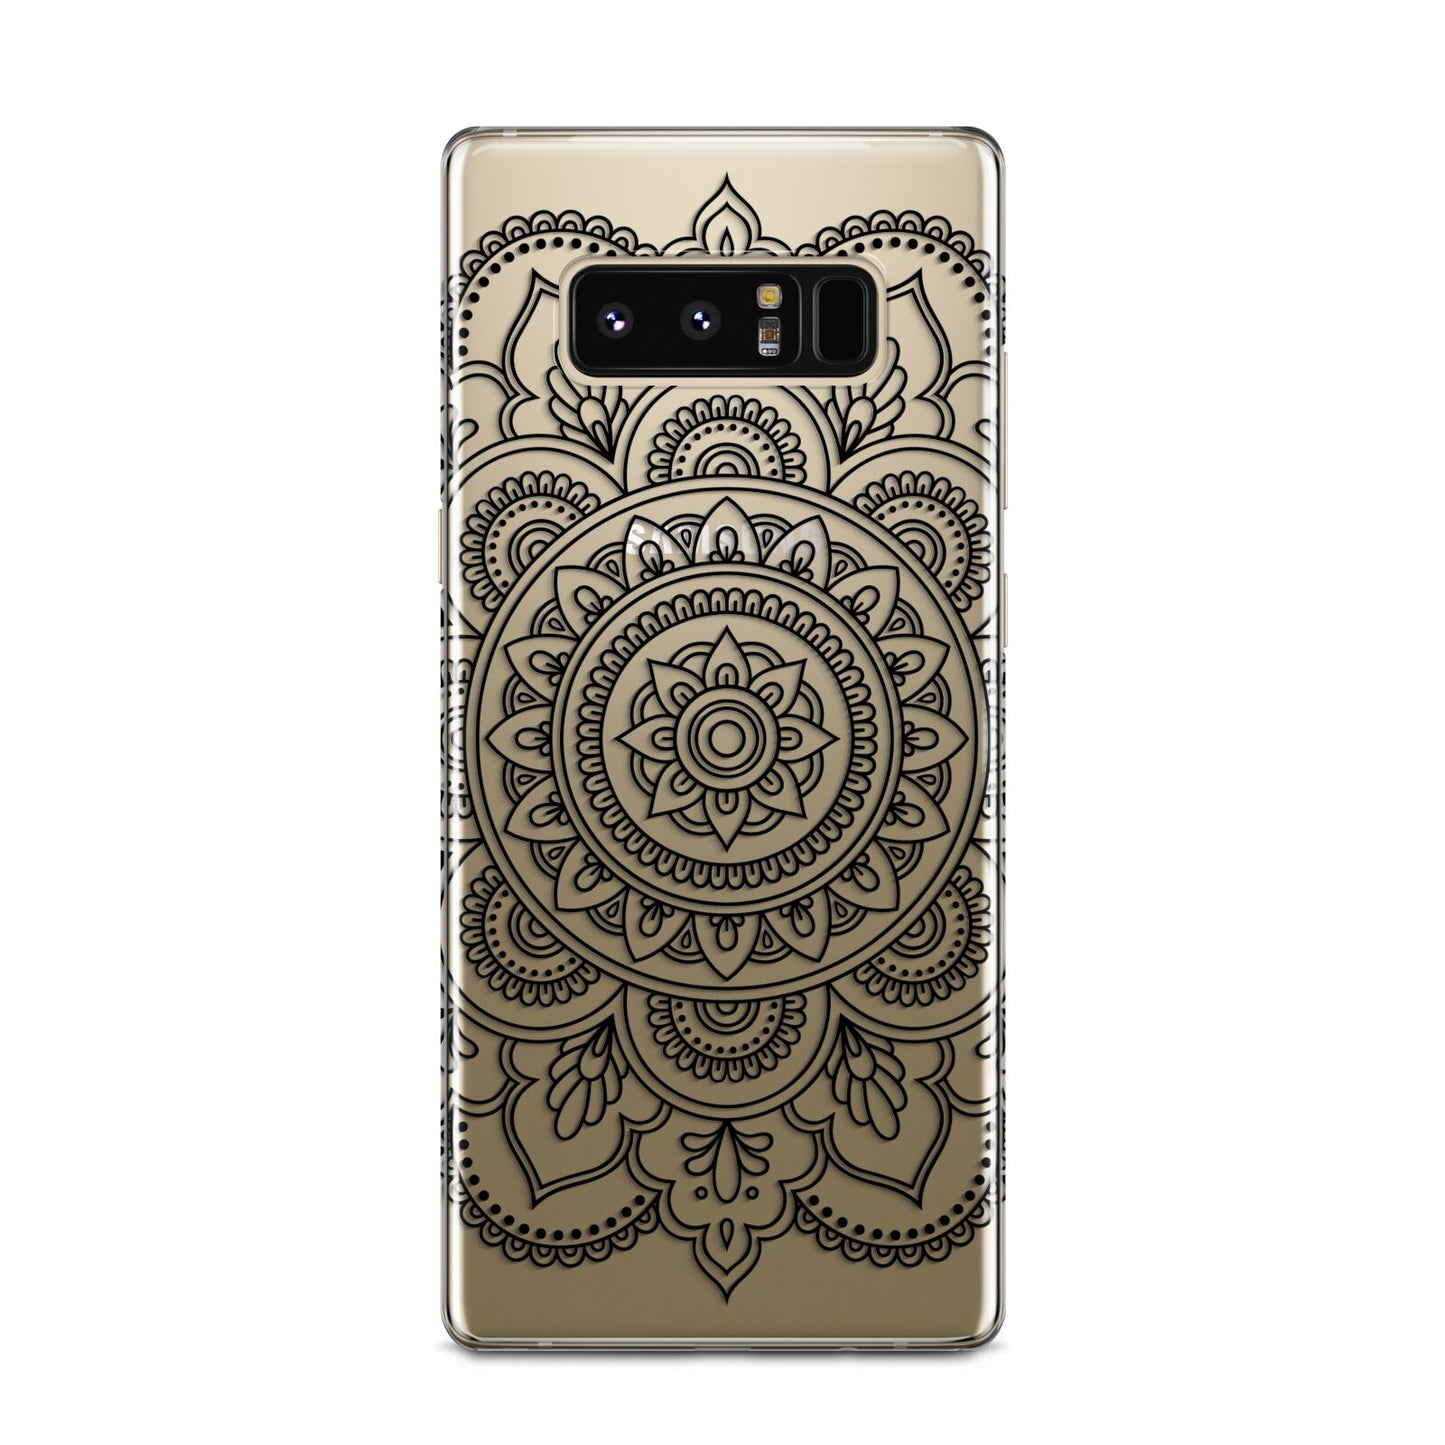 Mandala Samsung Galaxy Note 8 Case